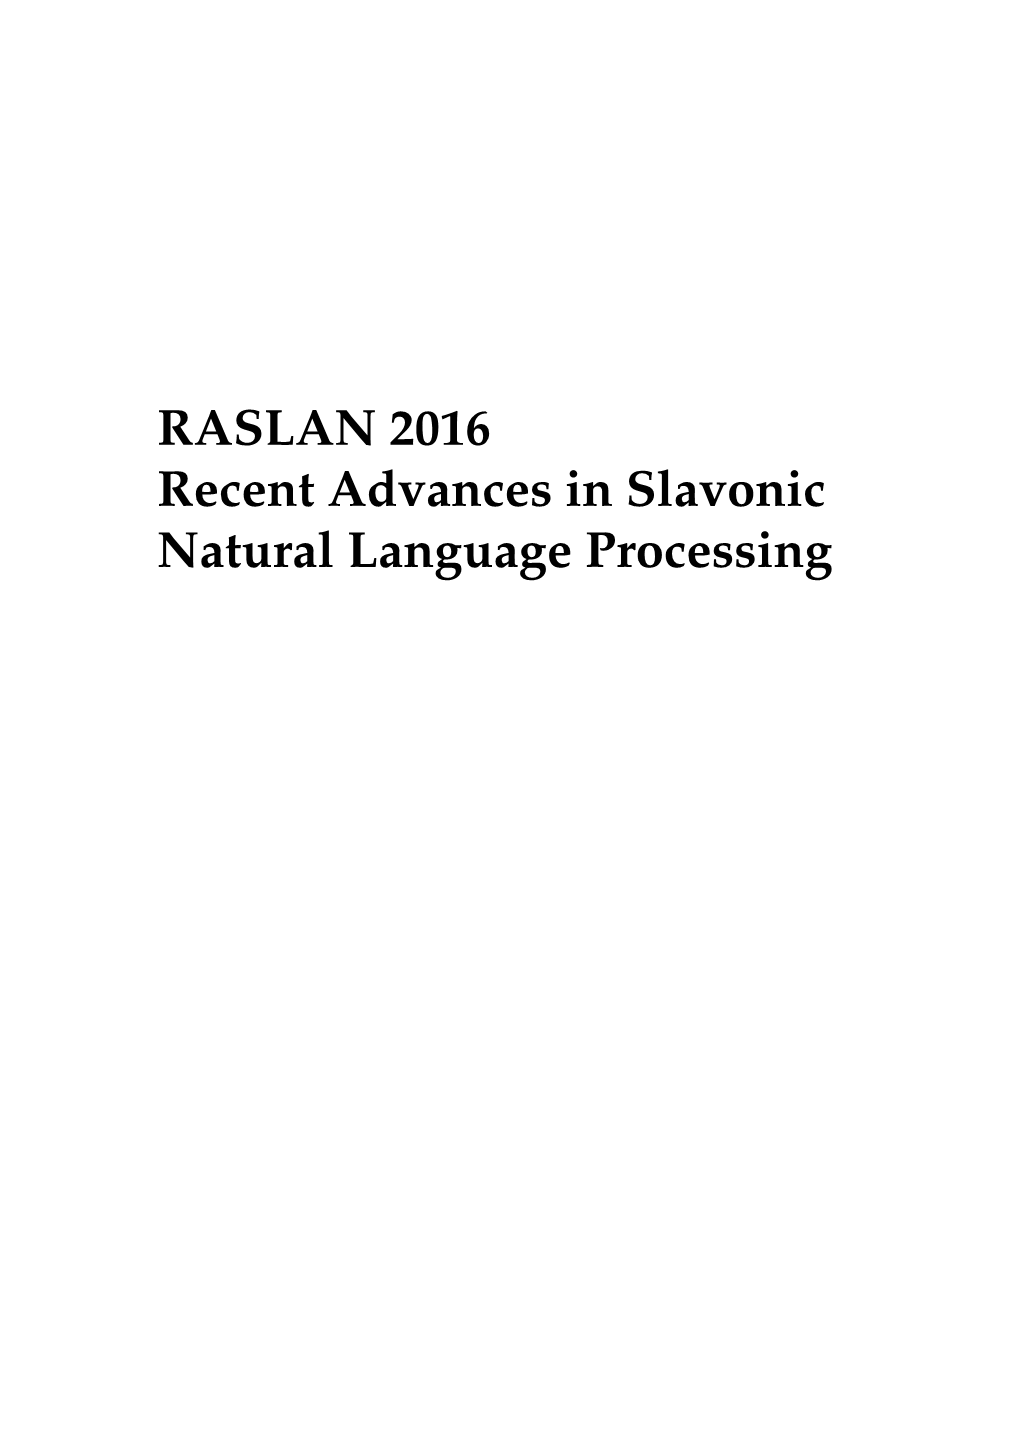 RASLAN 2016 Recent Advances in Slavonic Natural Language Processing